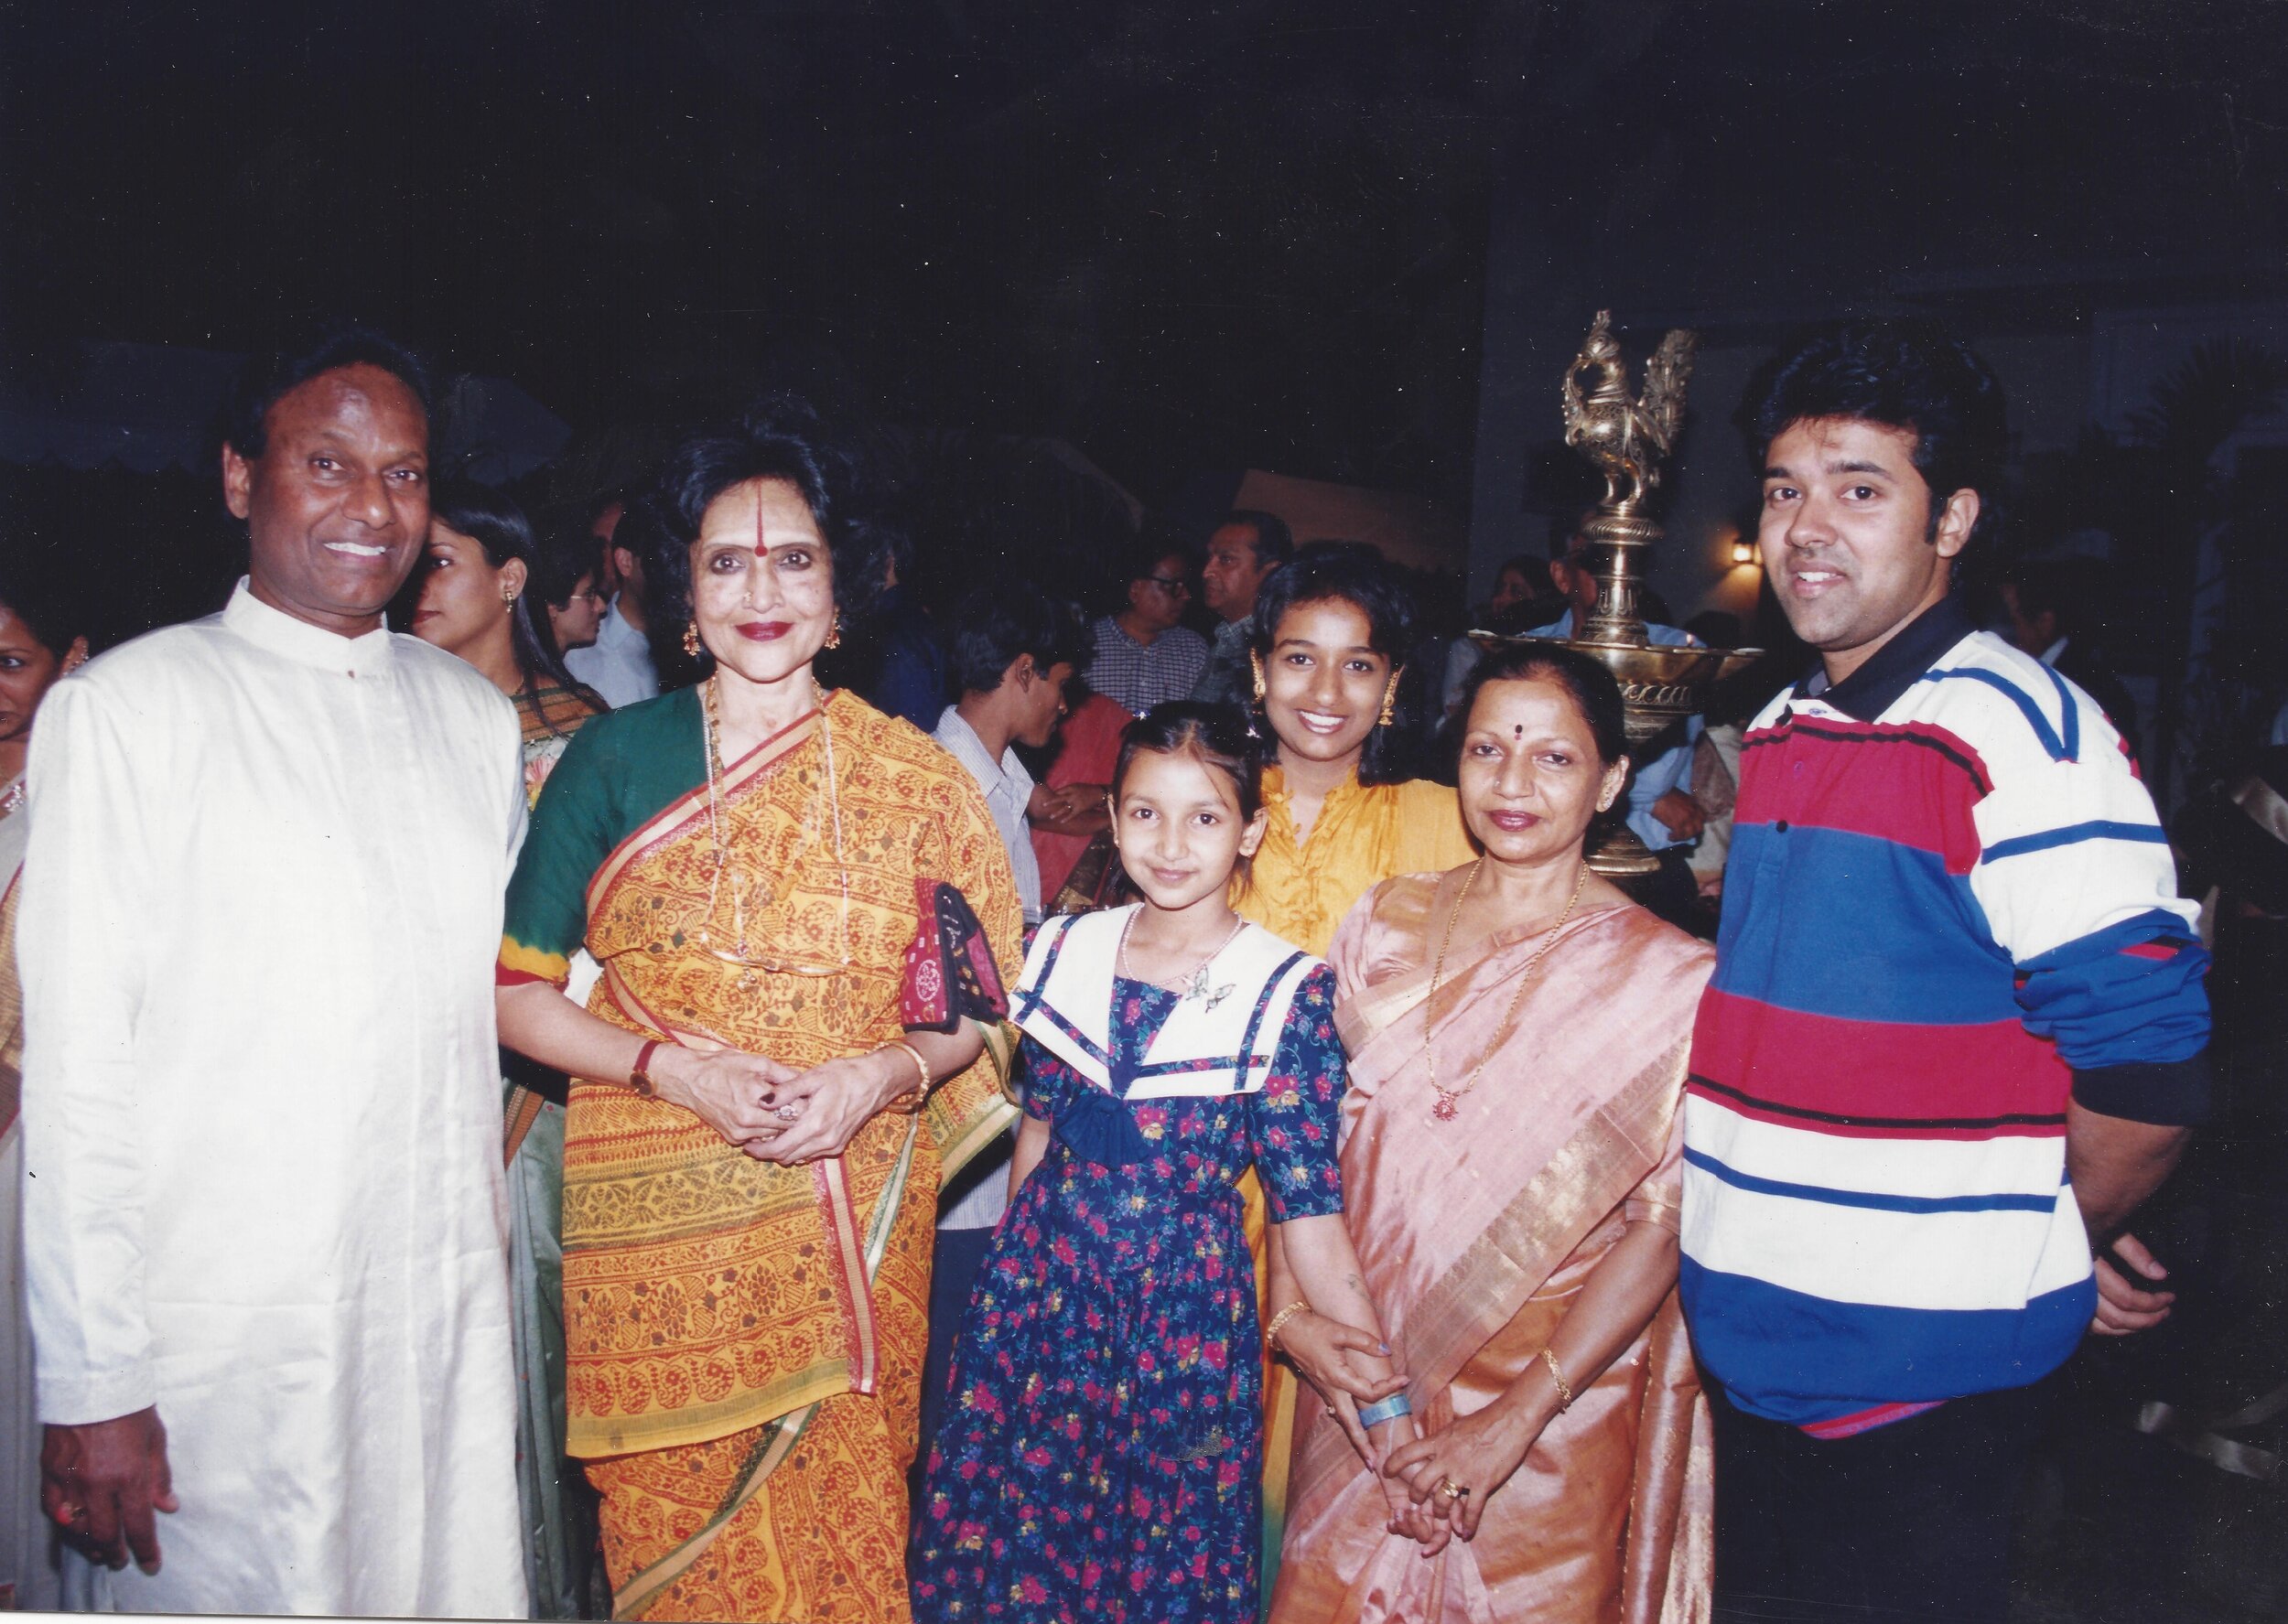 With legends Vyjayanthimala Bali and Raja Radha Reddy